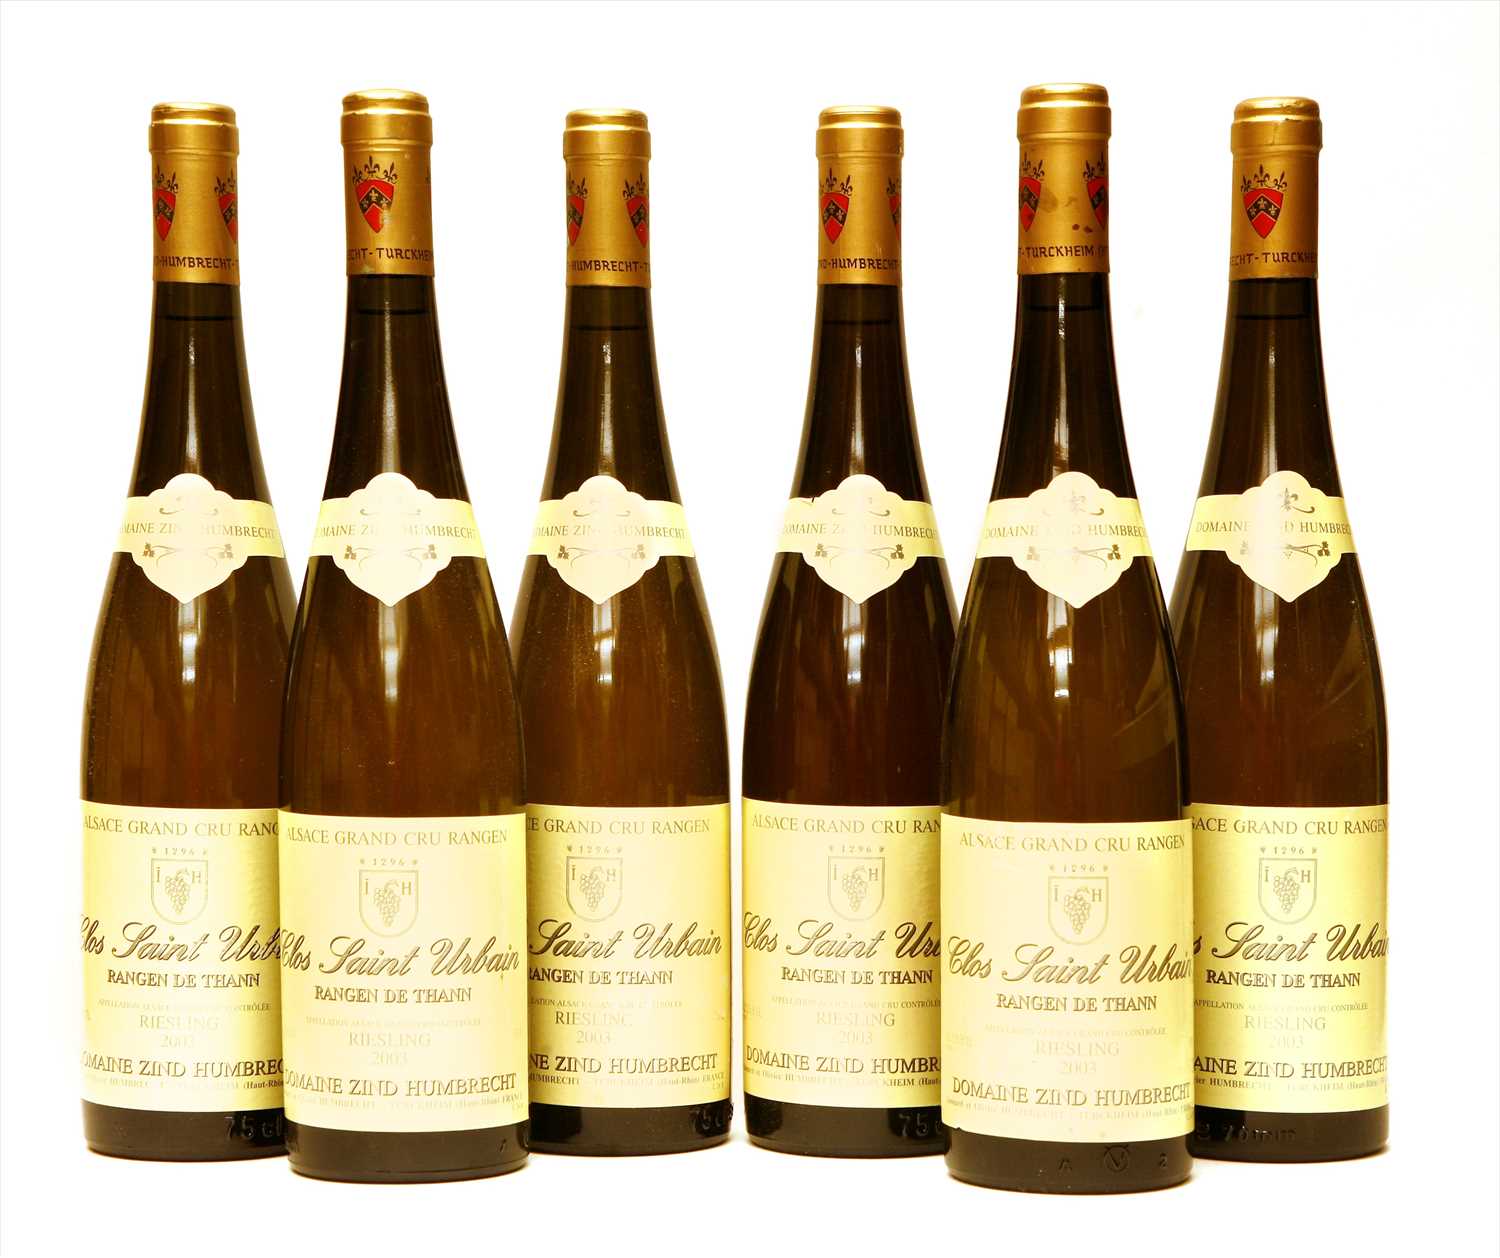 Lot 8 - Domaine Zind Humbrecht, Clos Saint Urbain, Riesling, 2003, six bottles